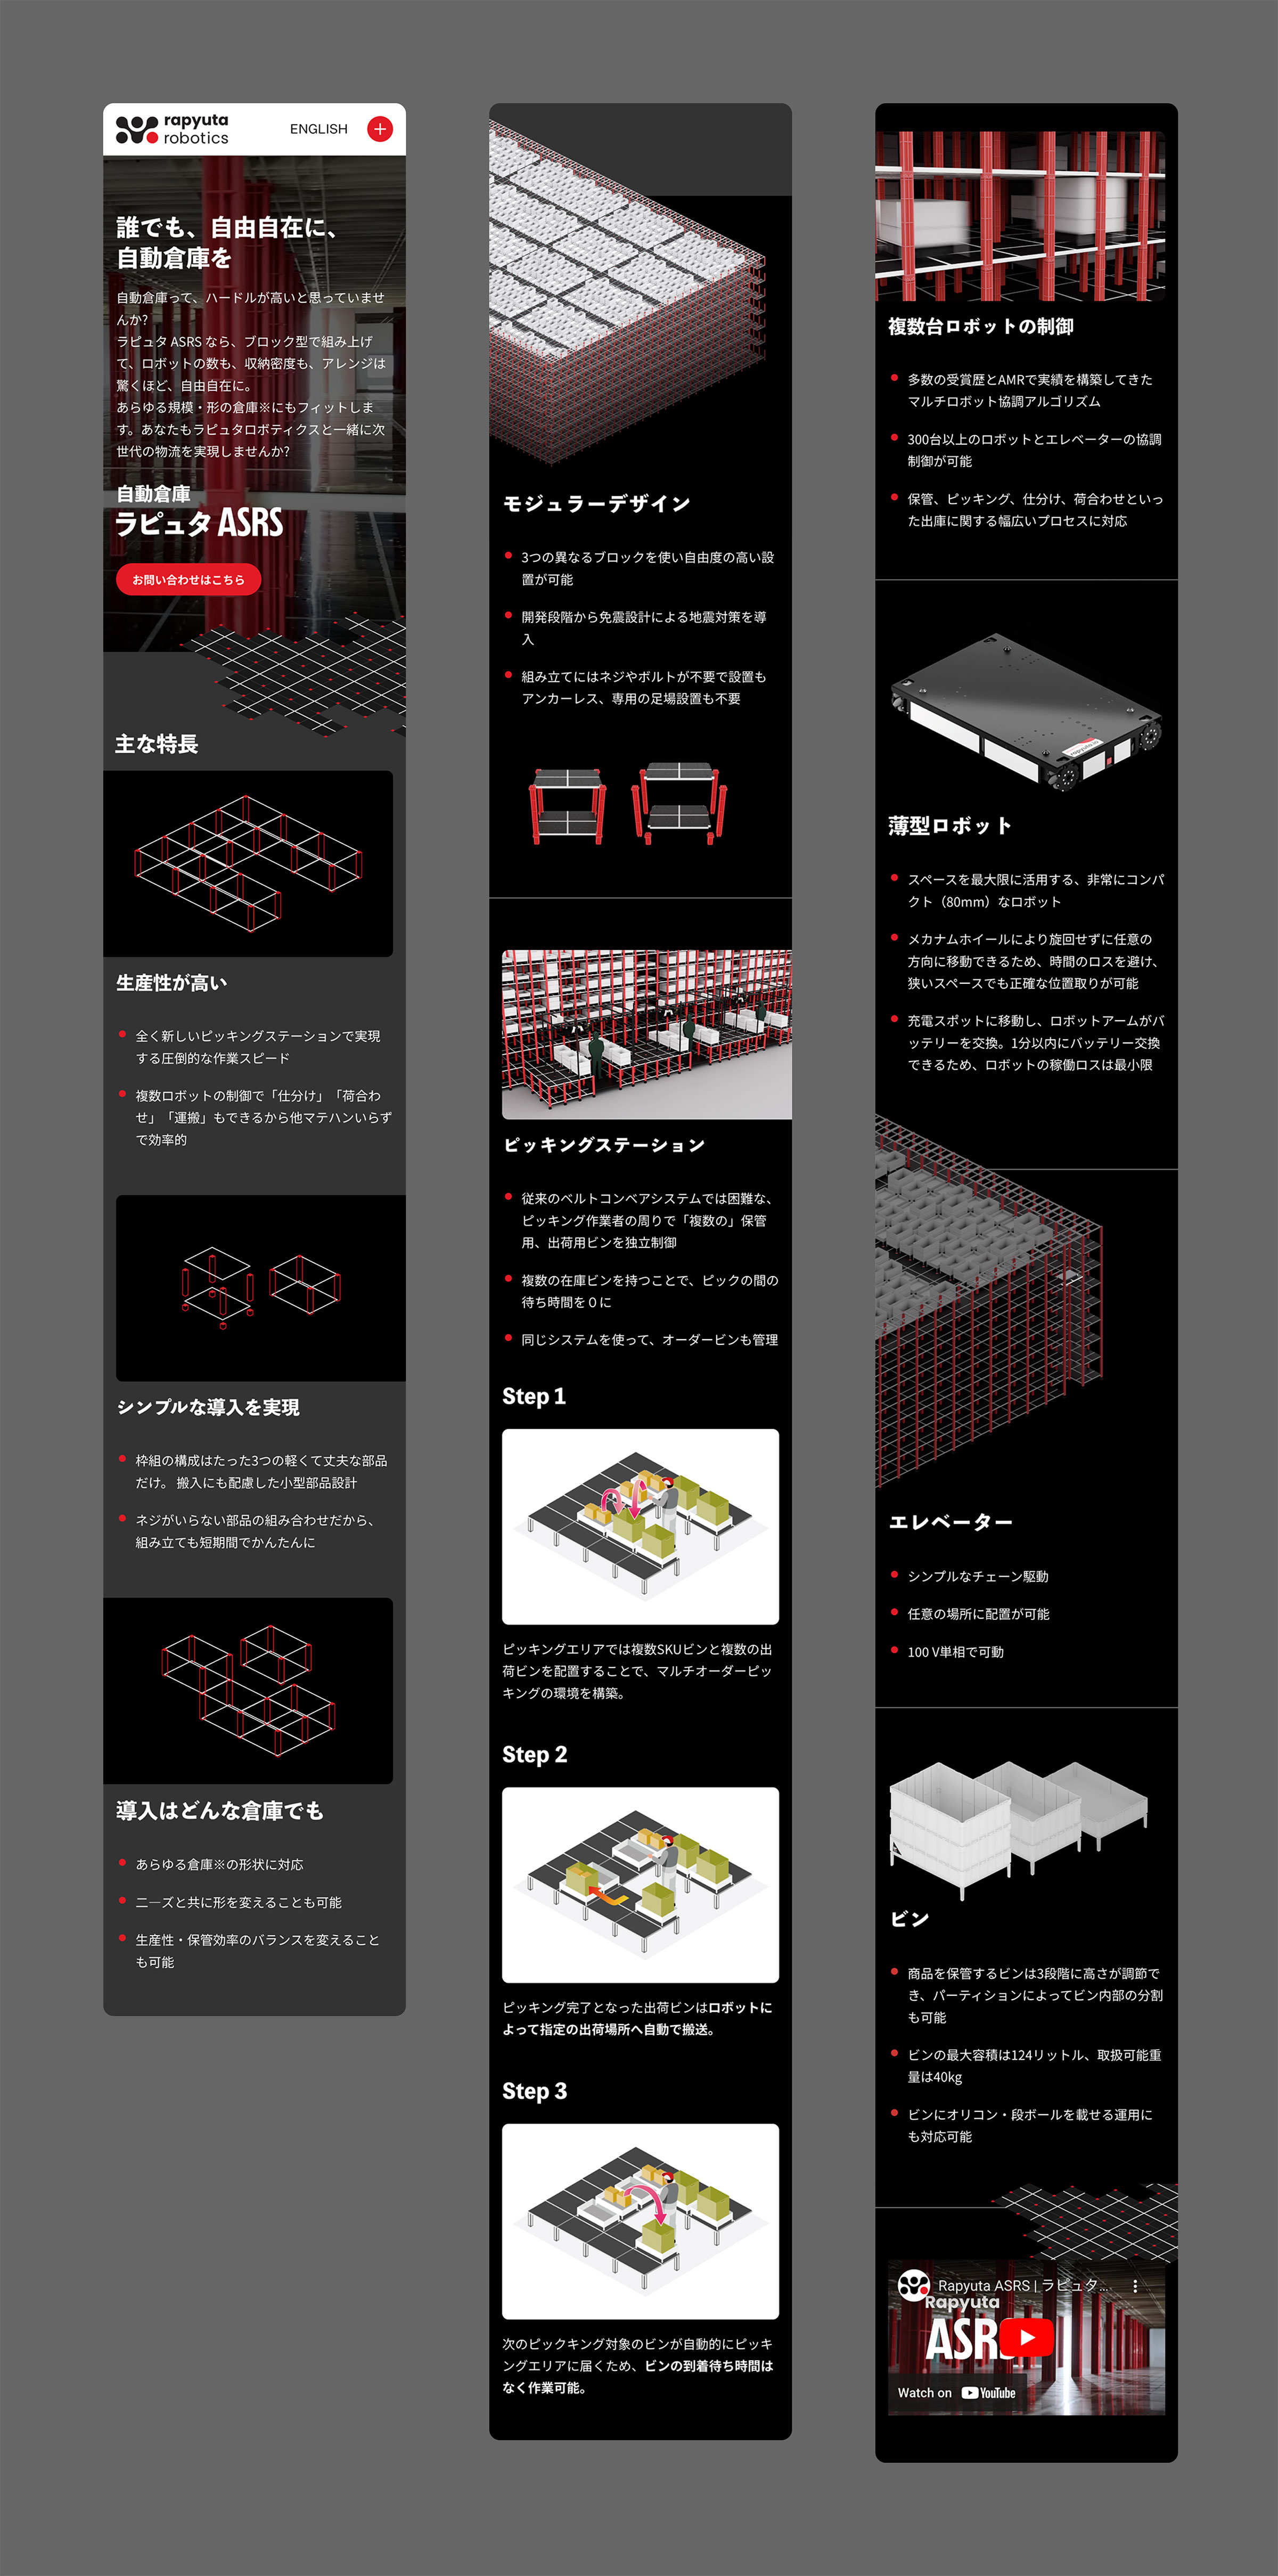 Rapyuta Robotics - UI/UX Design, Web Design & Development - Bento Graphics - Tokyo based design studio